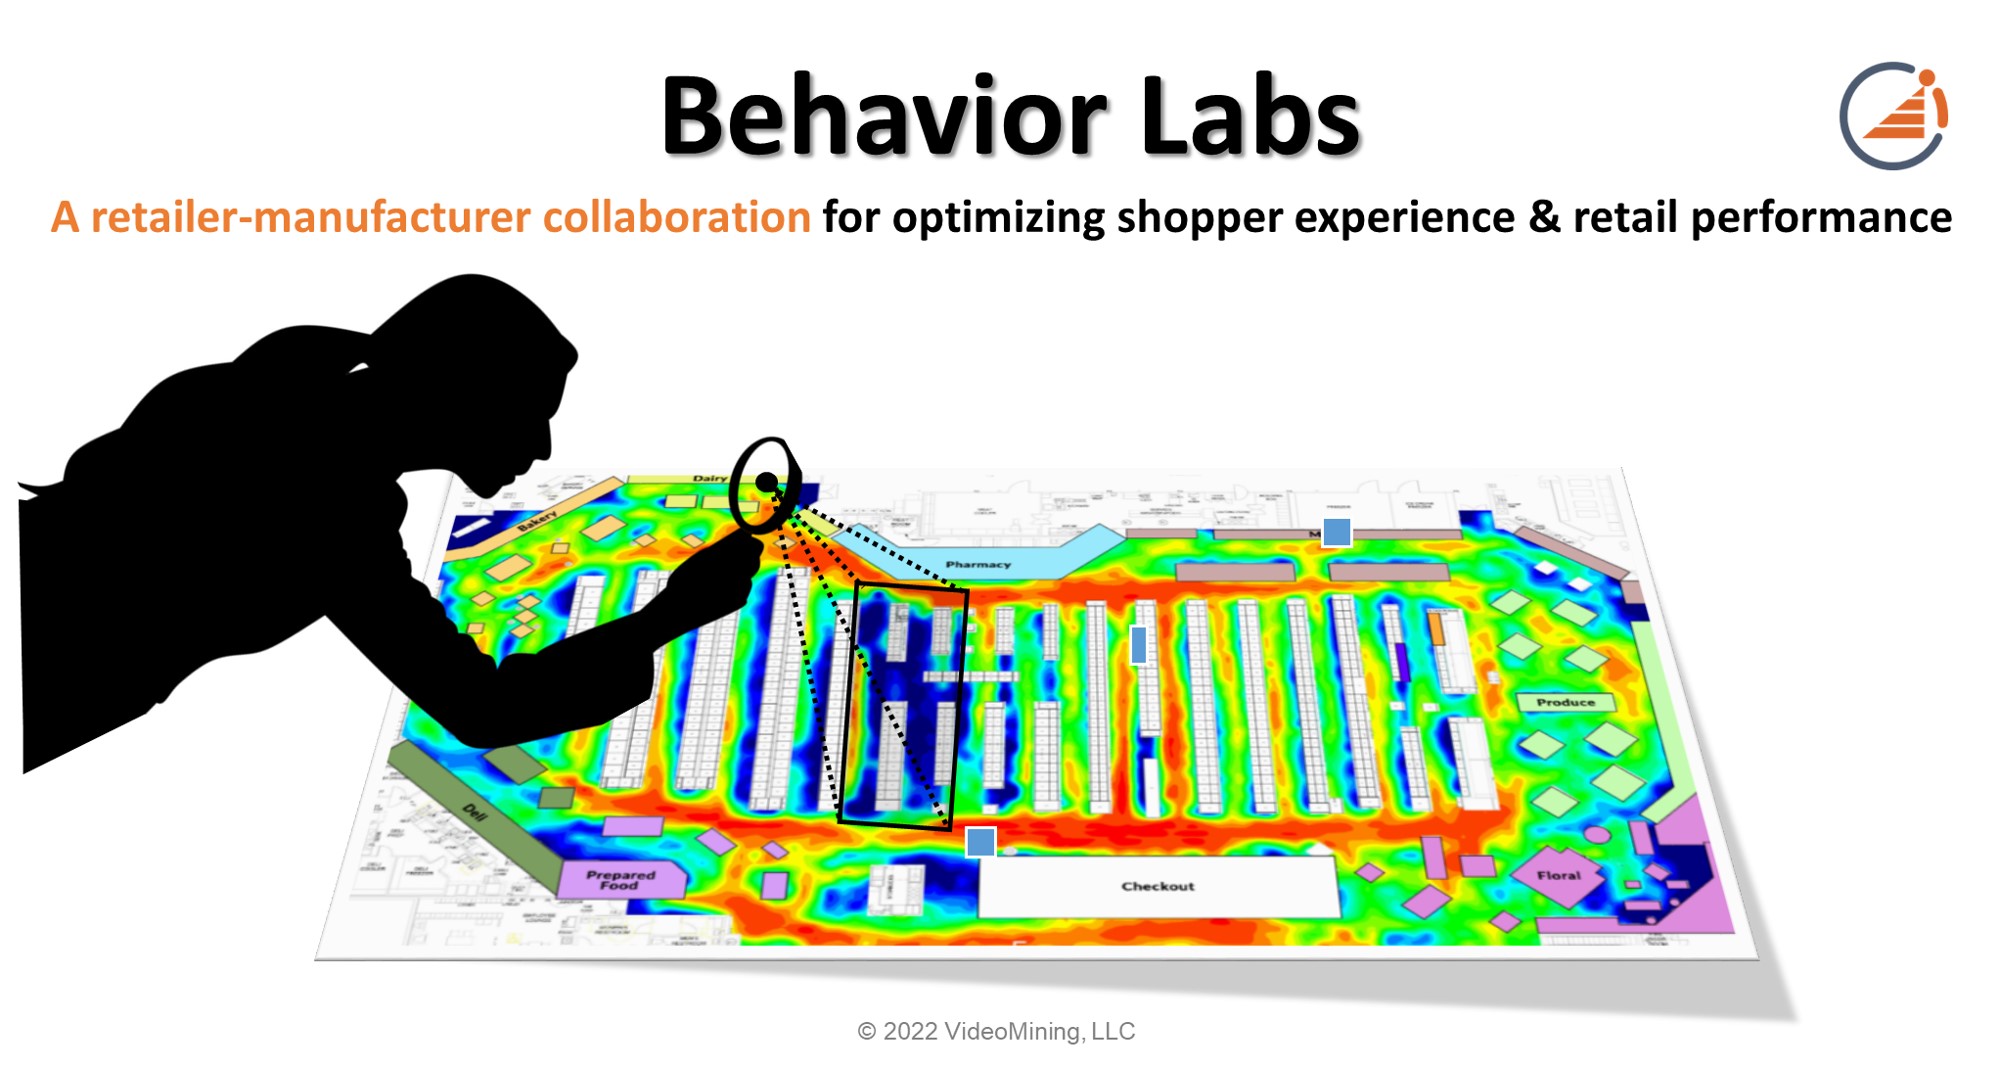 VideoMining introduces Behavior Labs platform for retailer-manufacturer collaboration